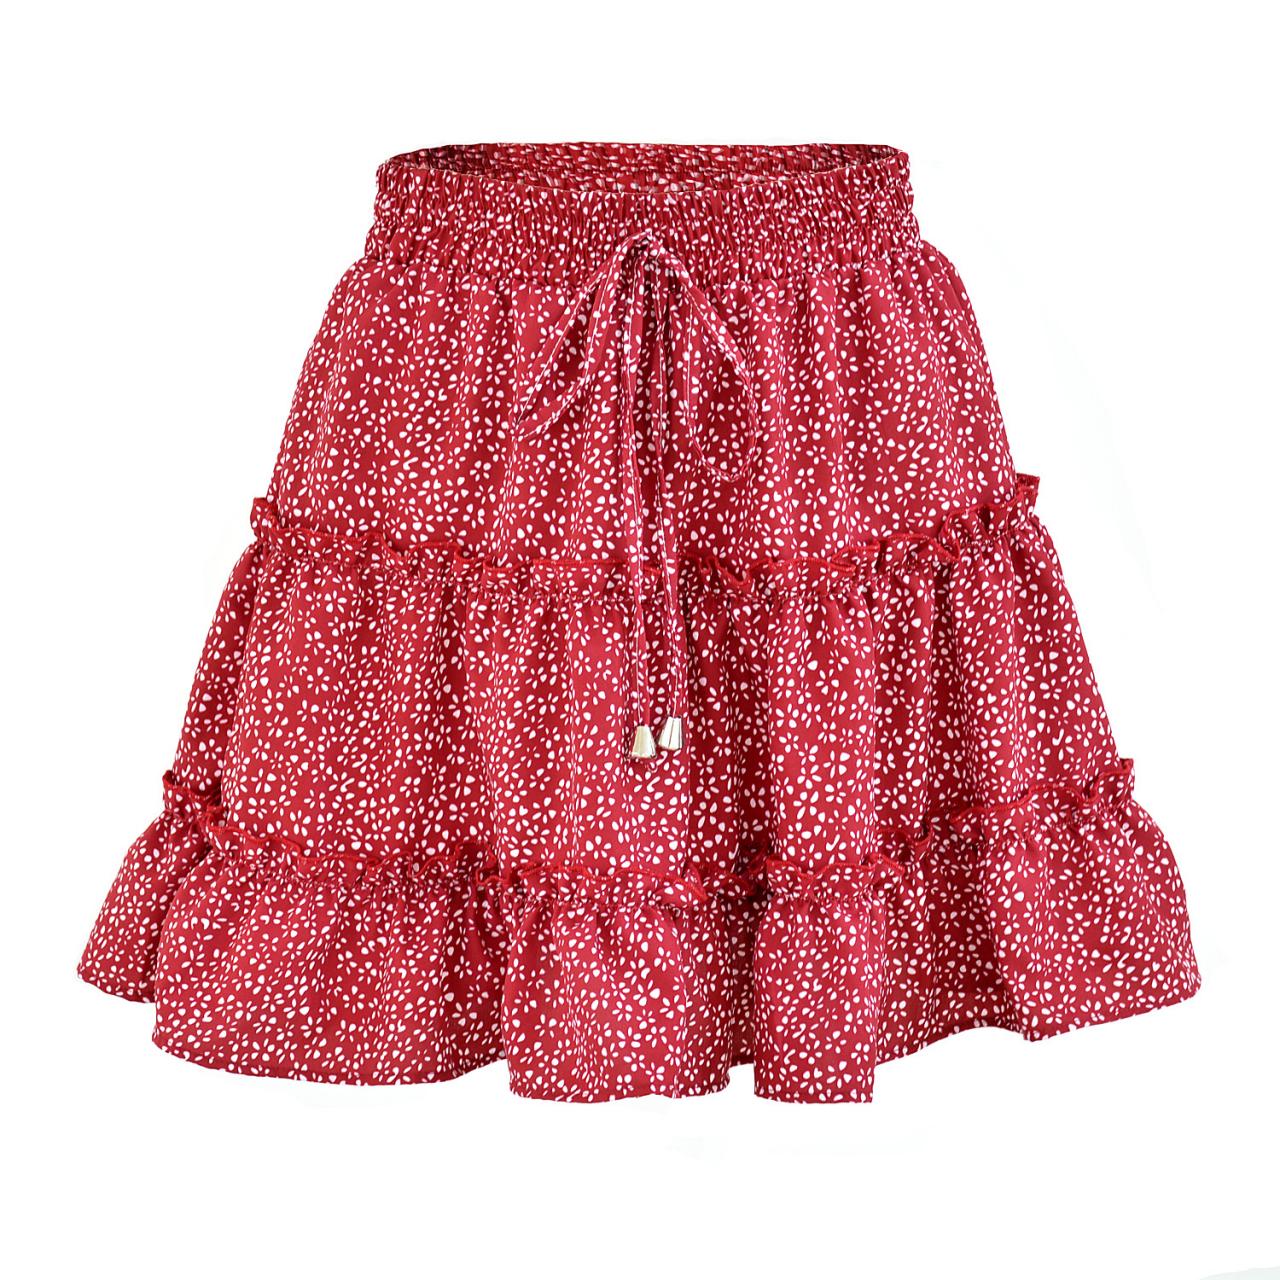 Women Mini Skirt High Waist Ruffles Casual Summer Beach Boho Floral Printed Short A-Line Skirt red polka dot